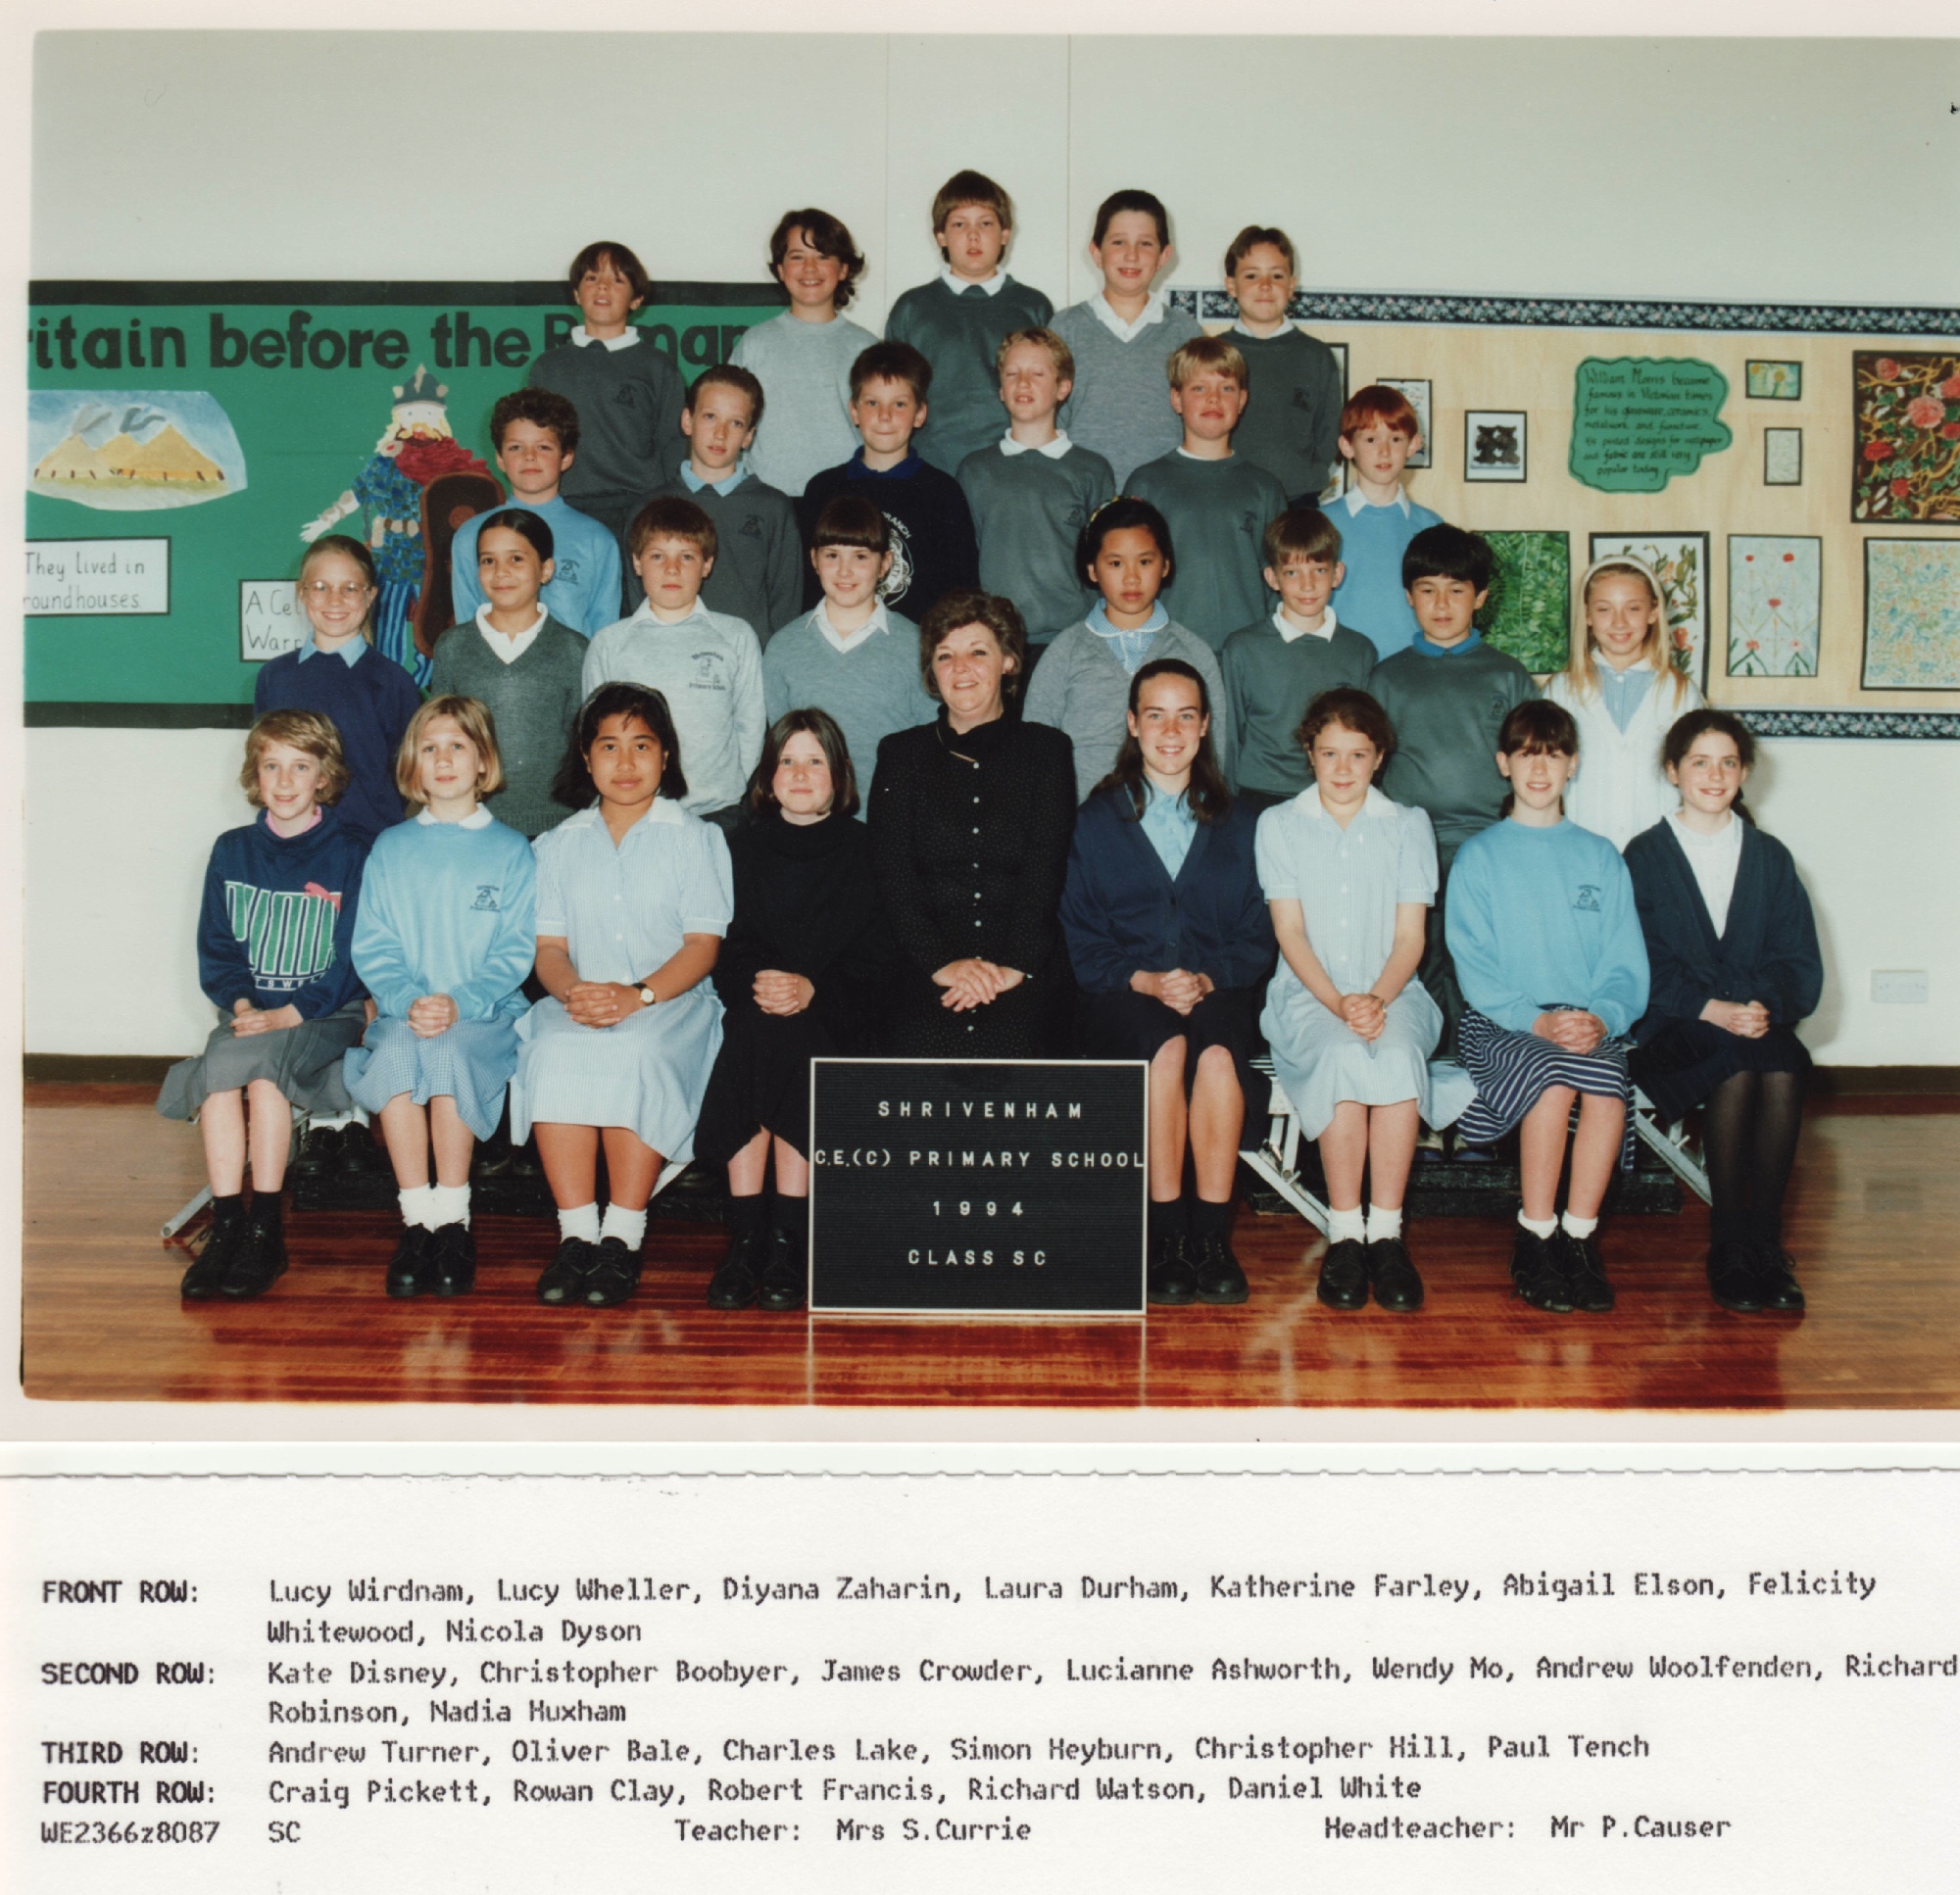 School Class SC of 1994